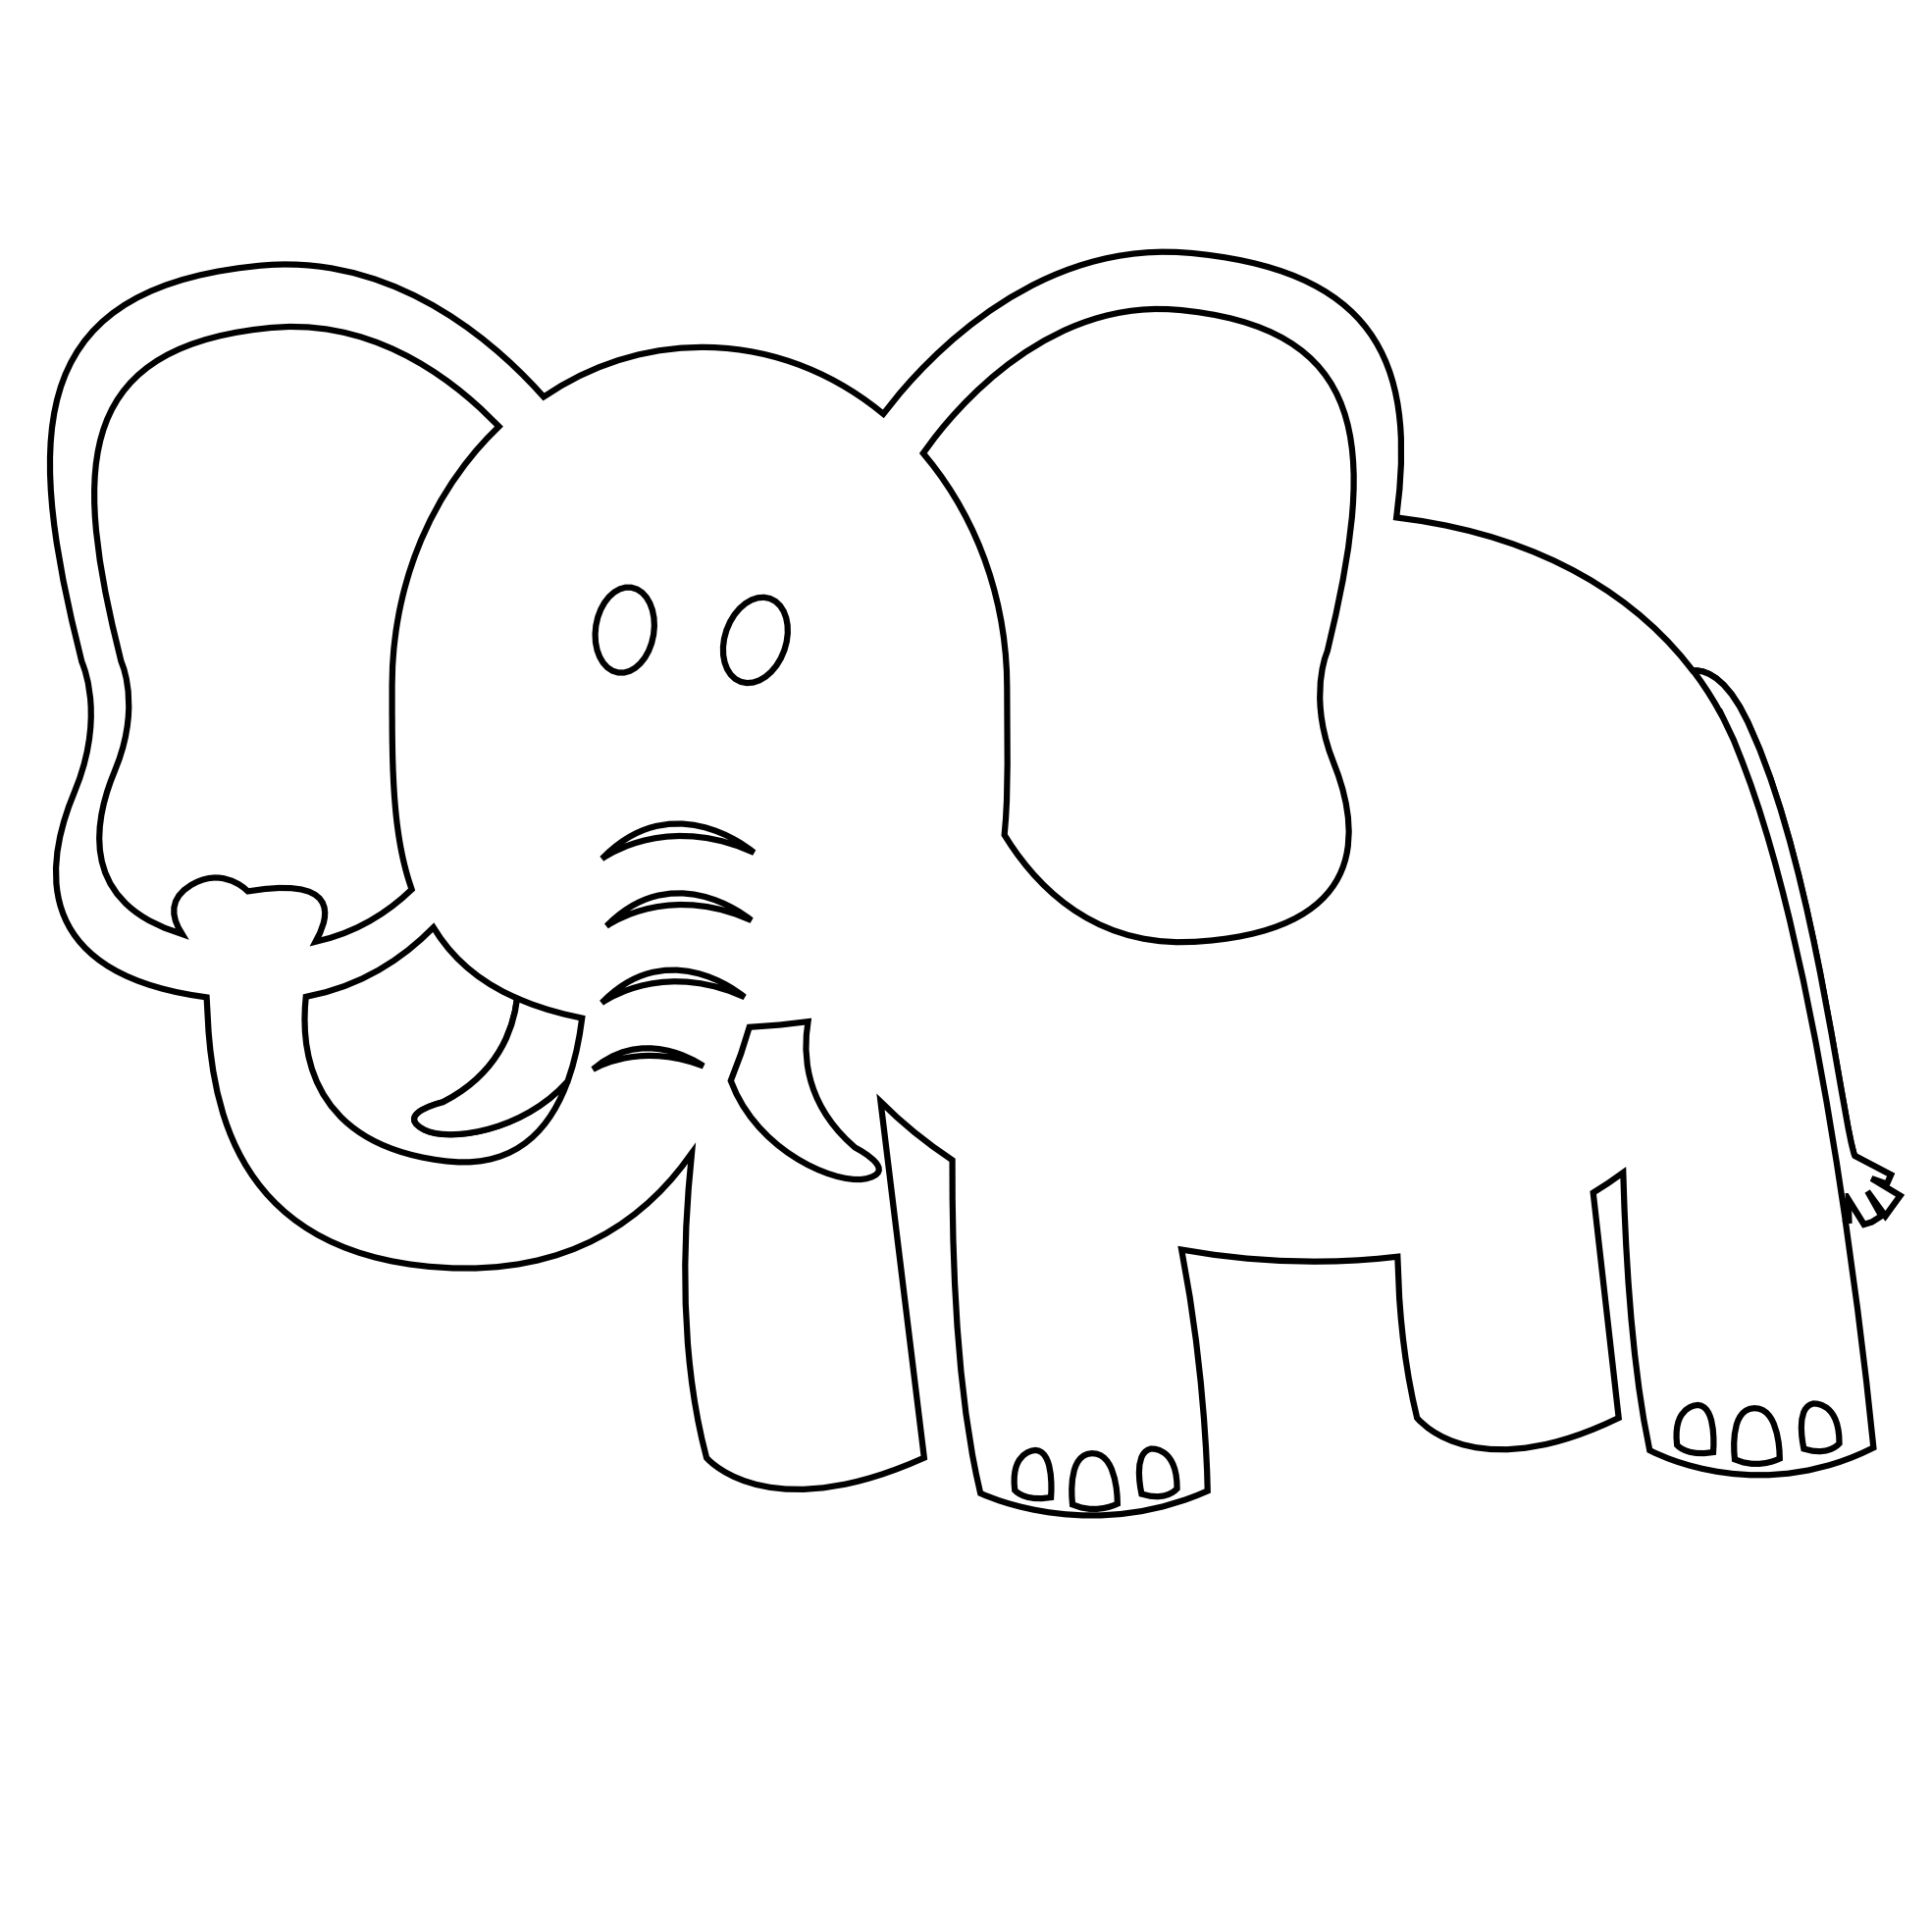 Download Elephant clipart ethnic, Elephant ethnic Transparent FREE ...